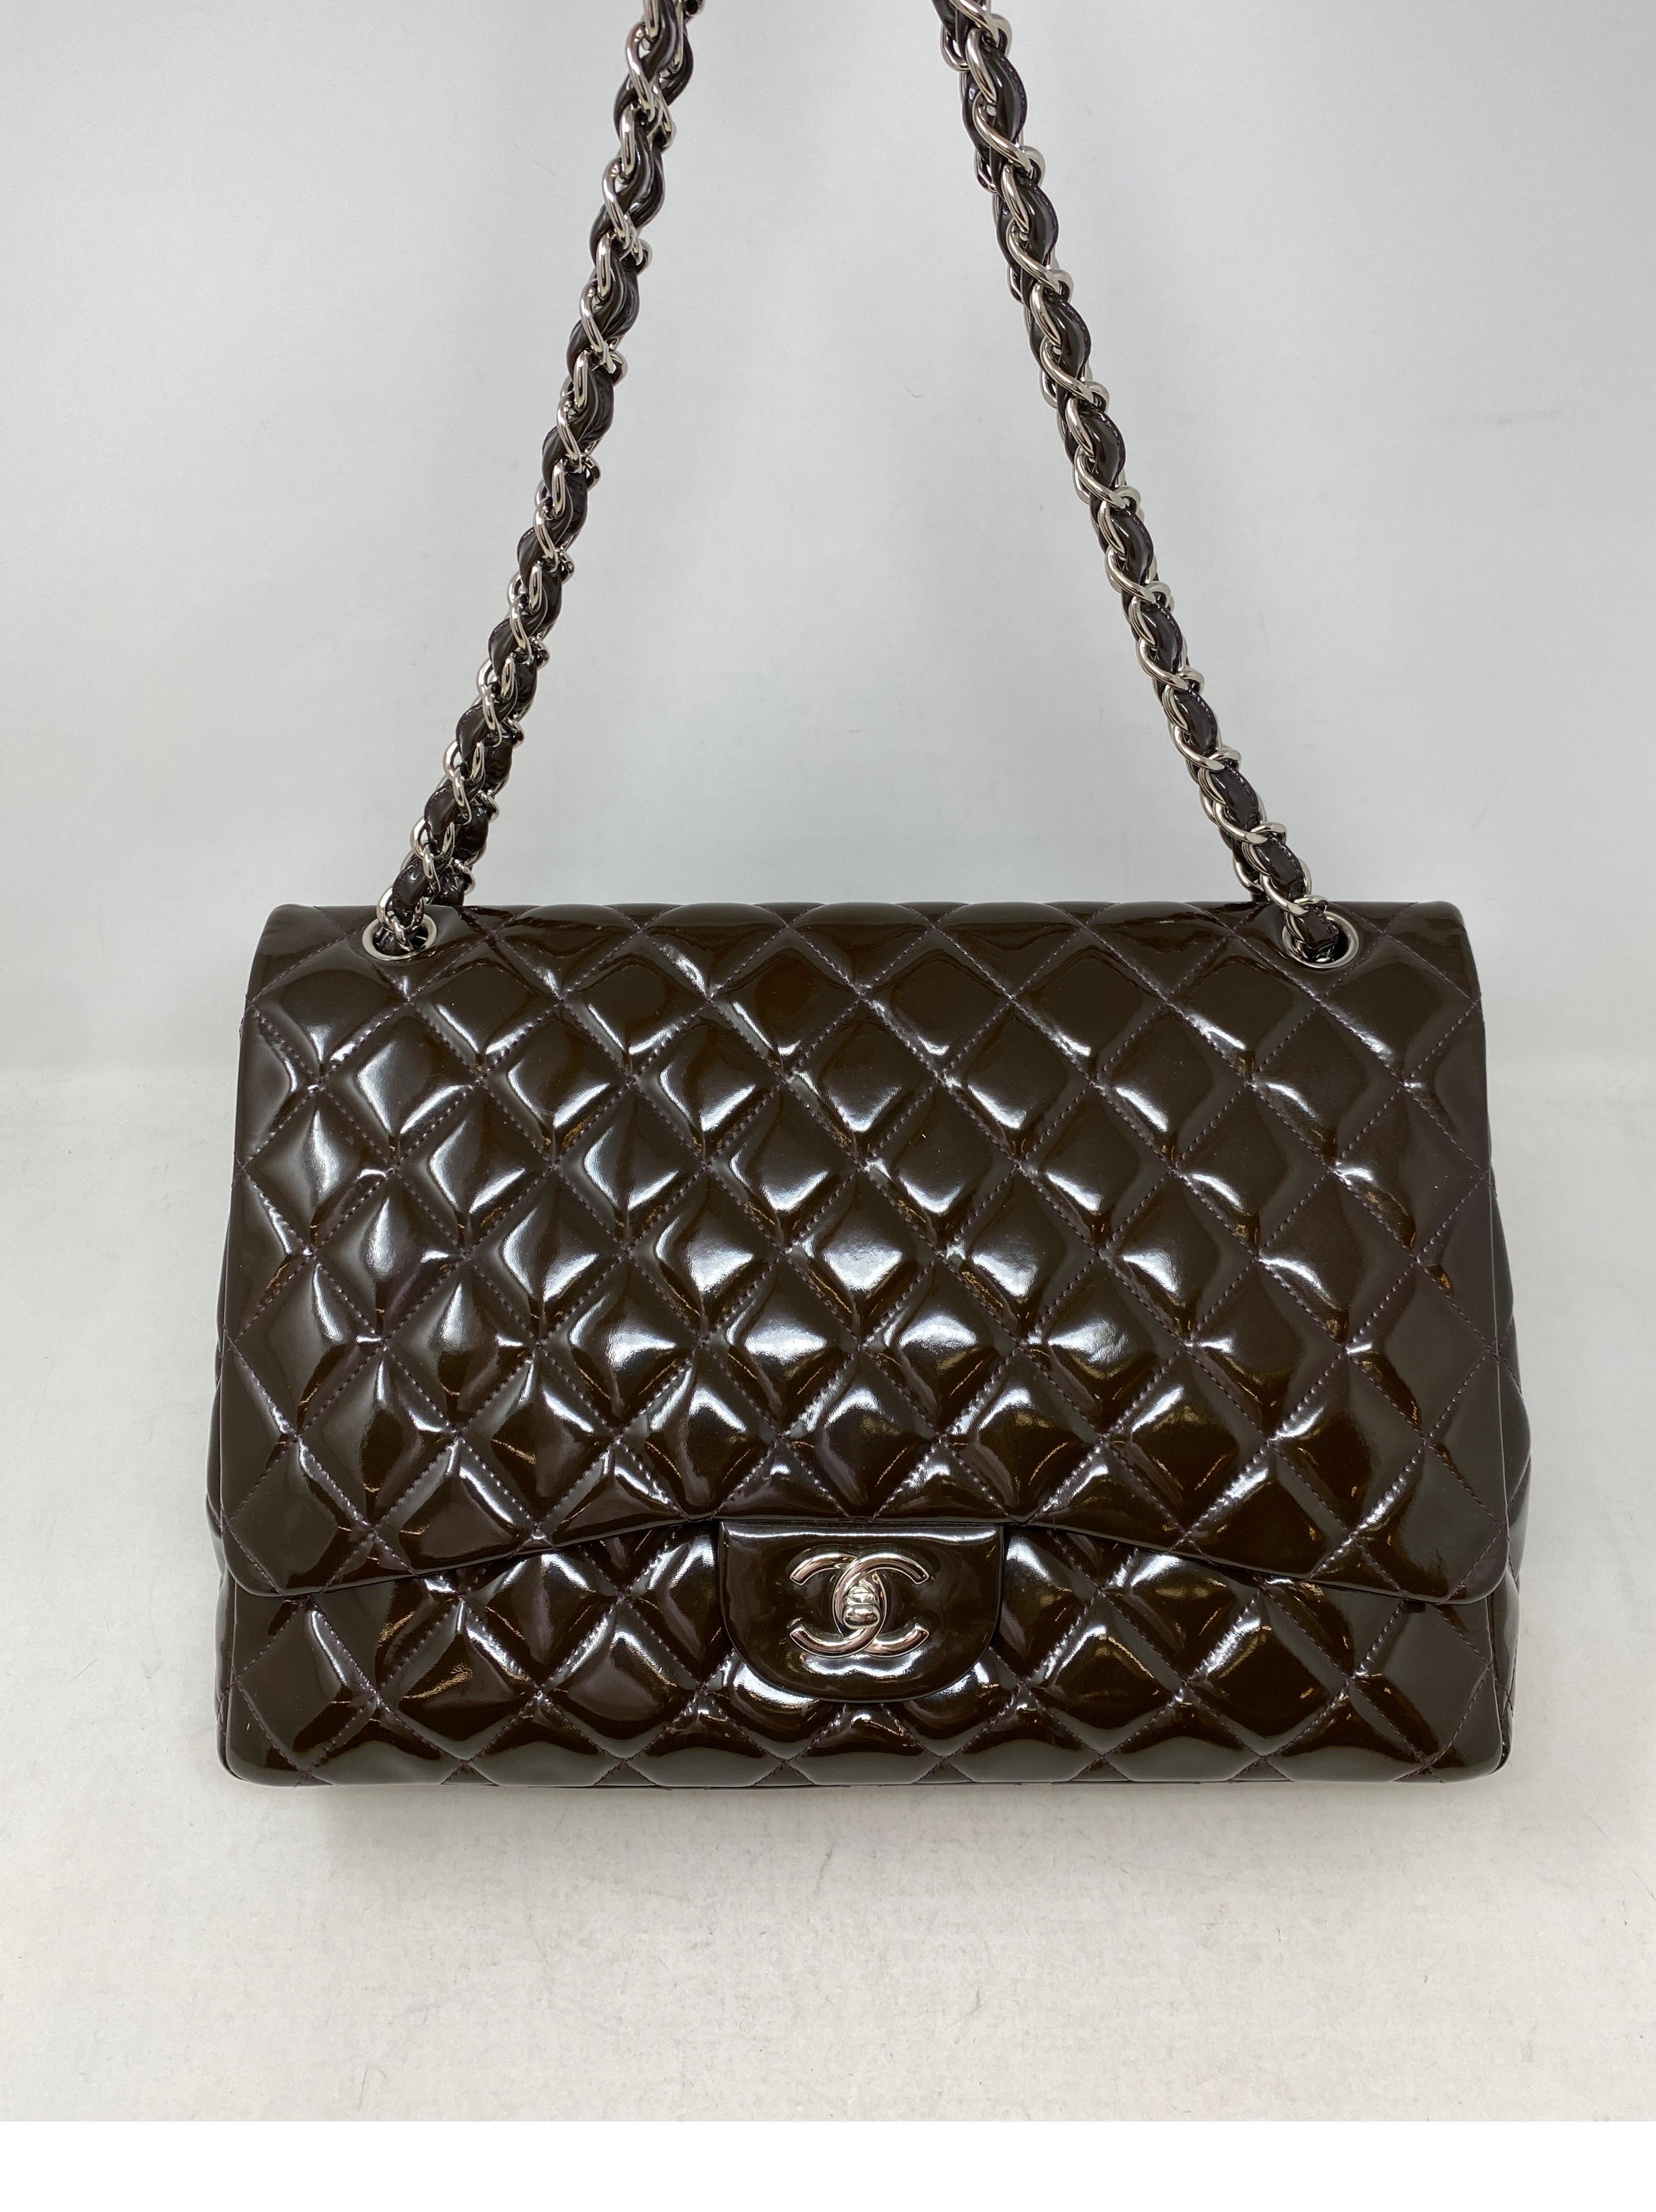 Chanel Jumbo Patent Leather Brown Bag  2